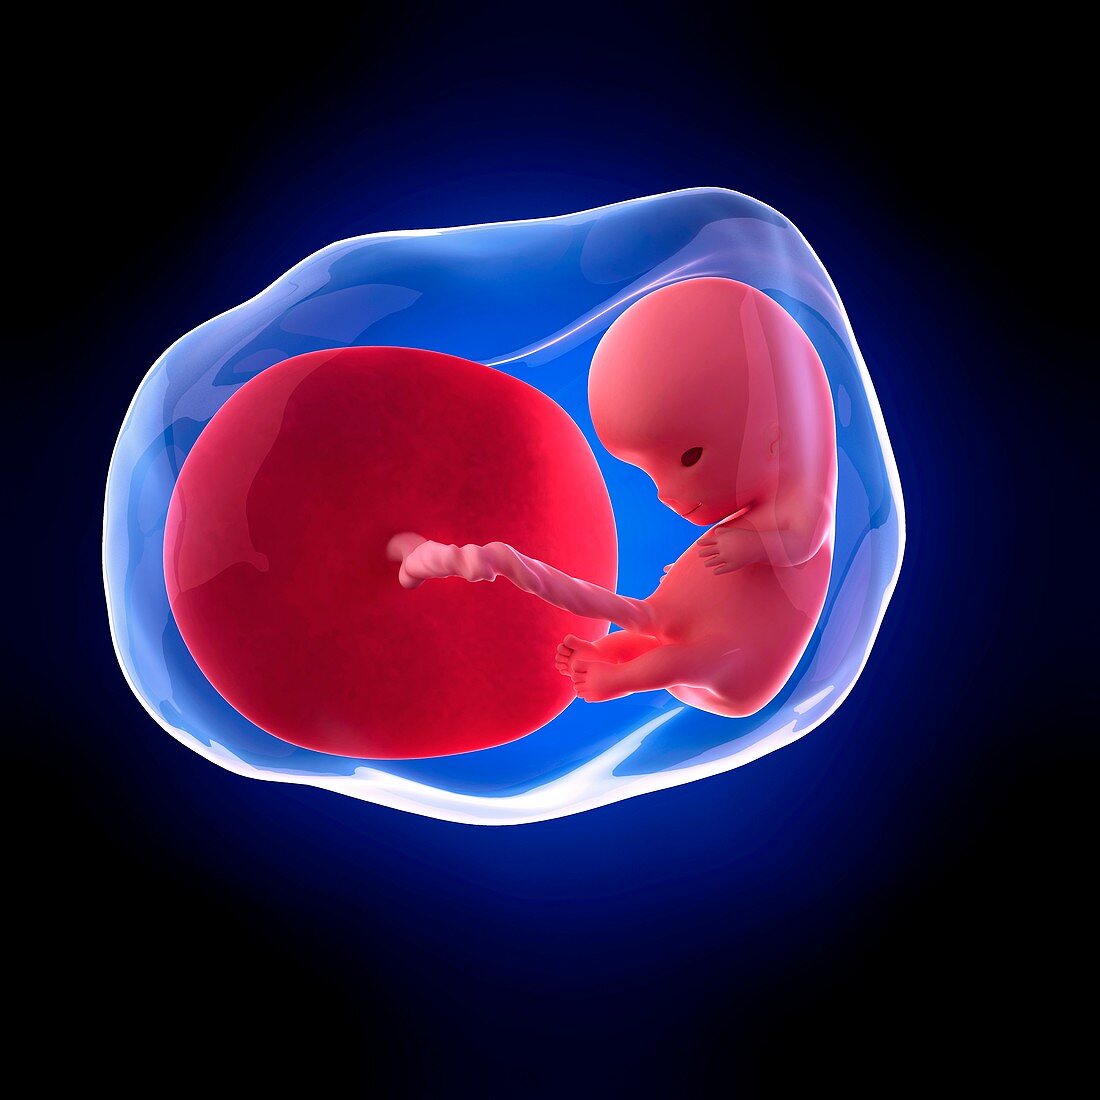 Human fetus age 10 weeks